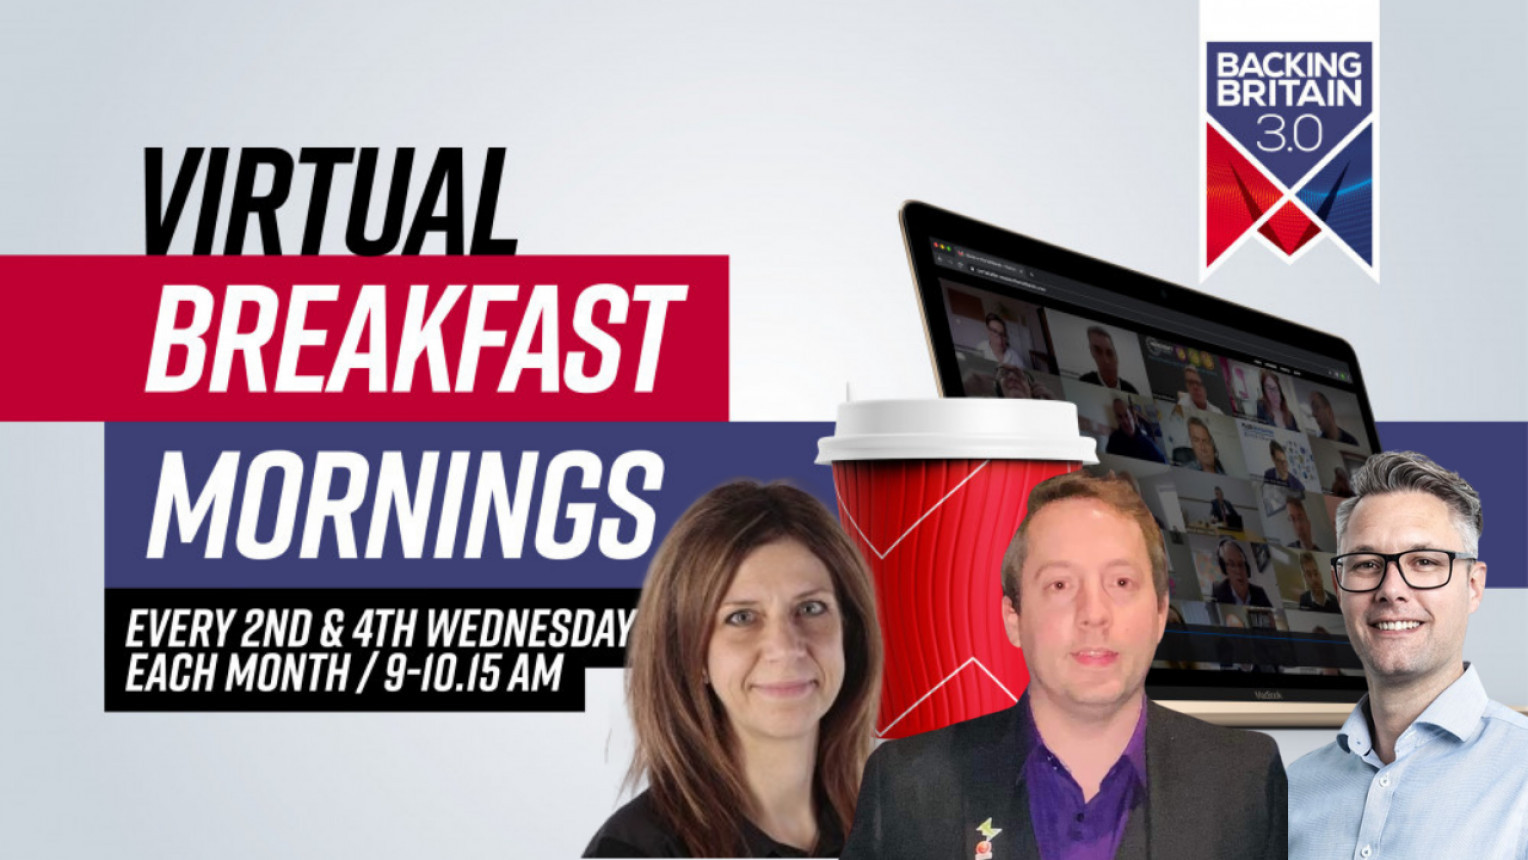 Backing Britain Virtual Breakfast Mornings